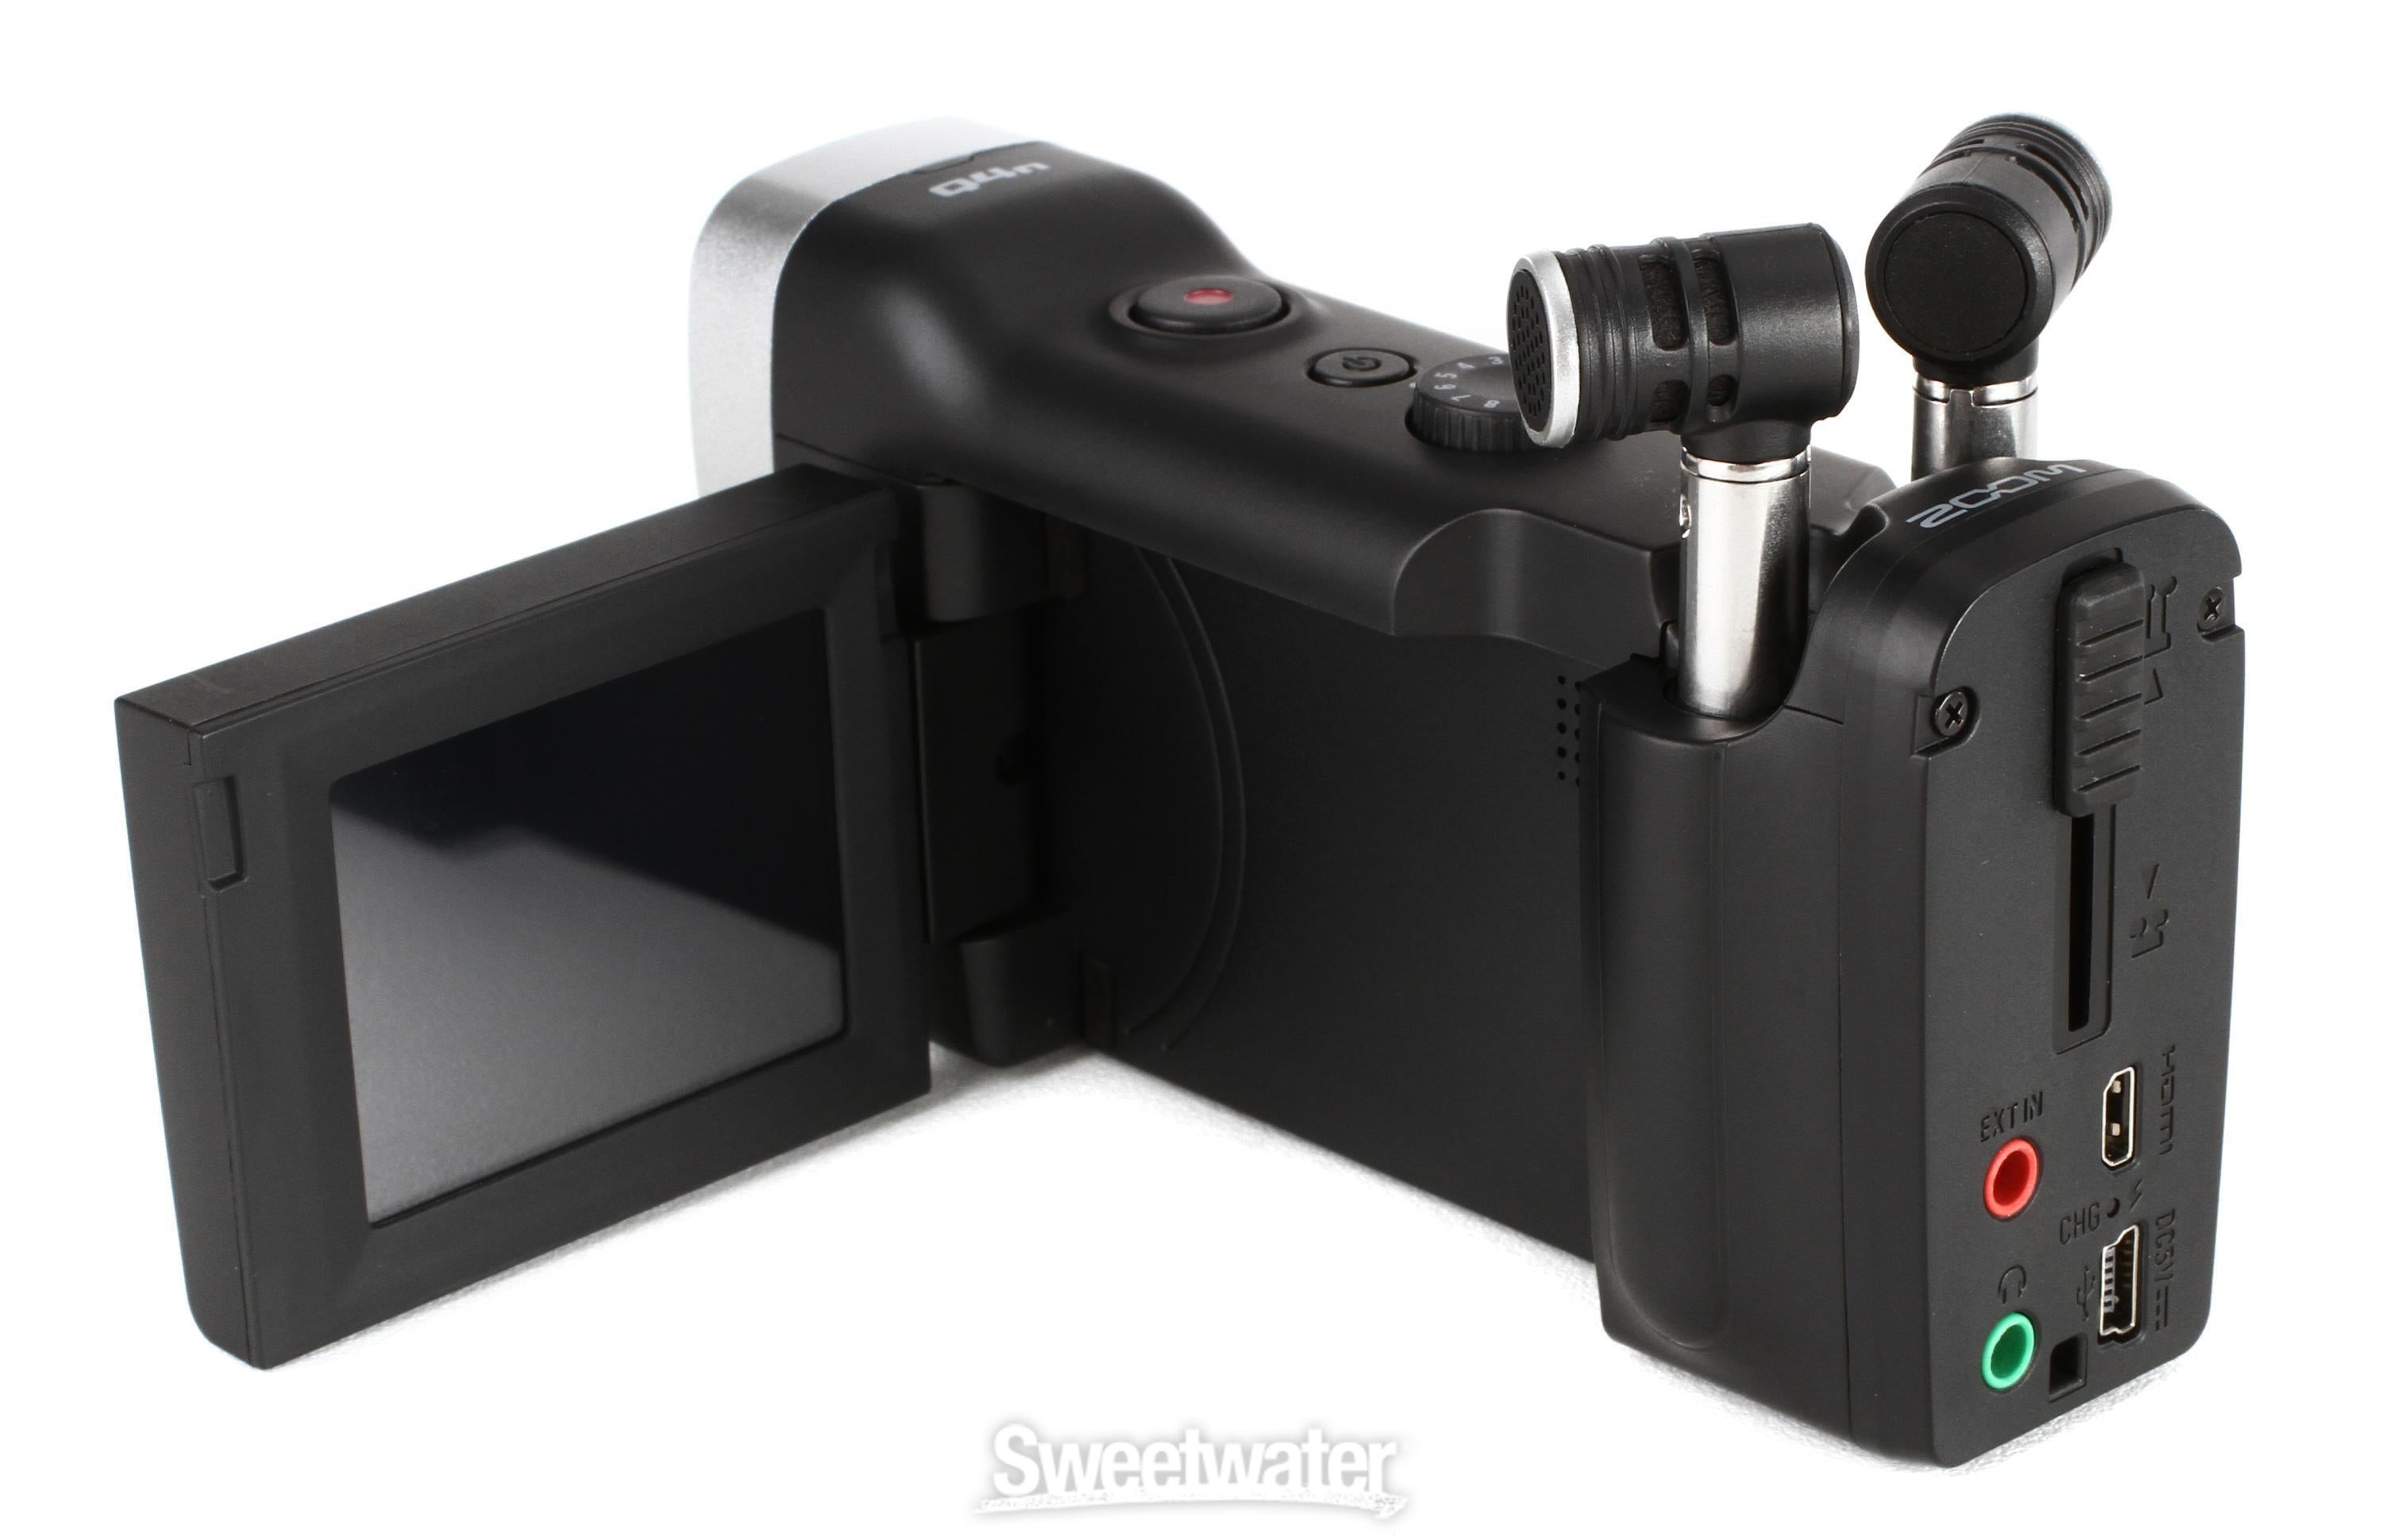 Zoom Q4n 2.3K HD Handy Video Recorder Reviews | Sweetwater